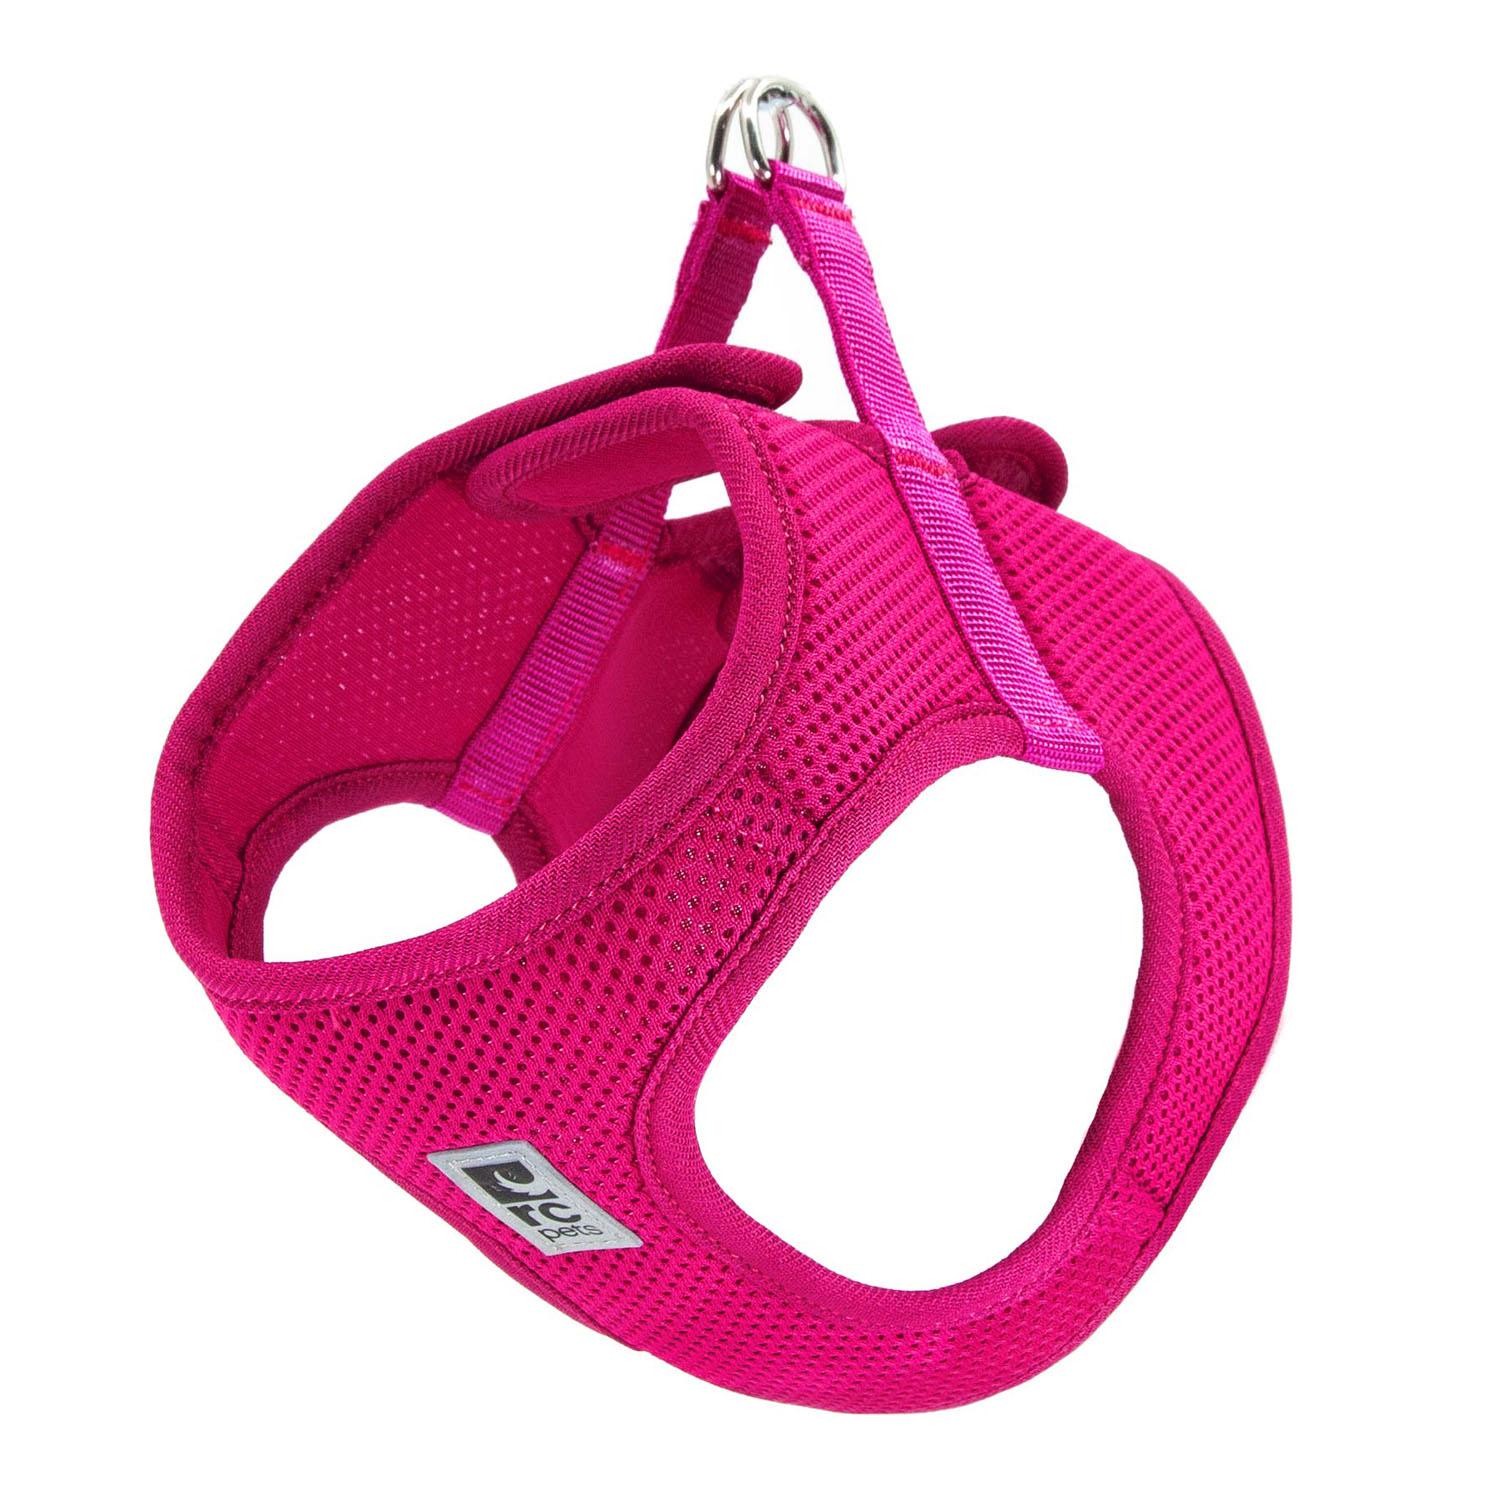 Step-in Cirque Dog Harness - Raspberry